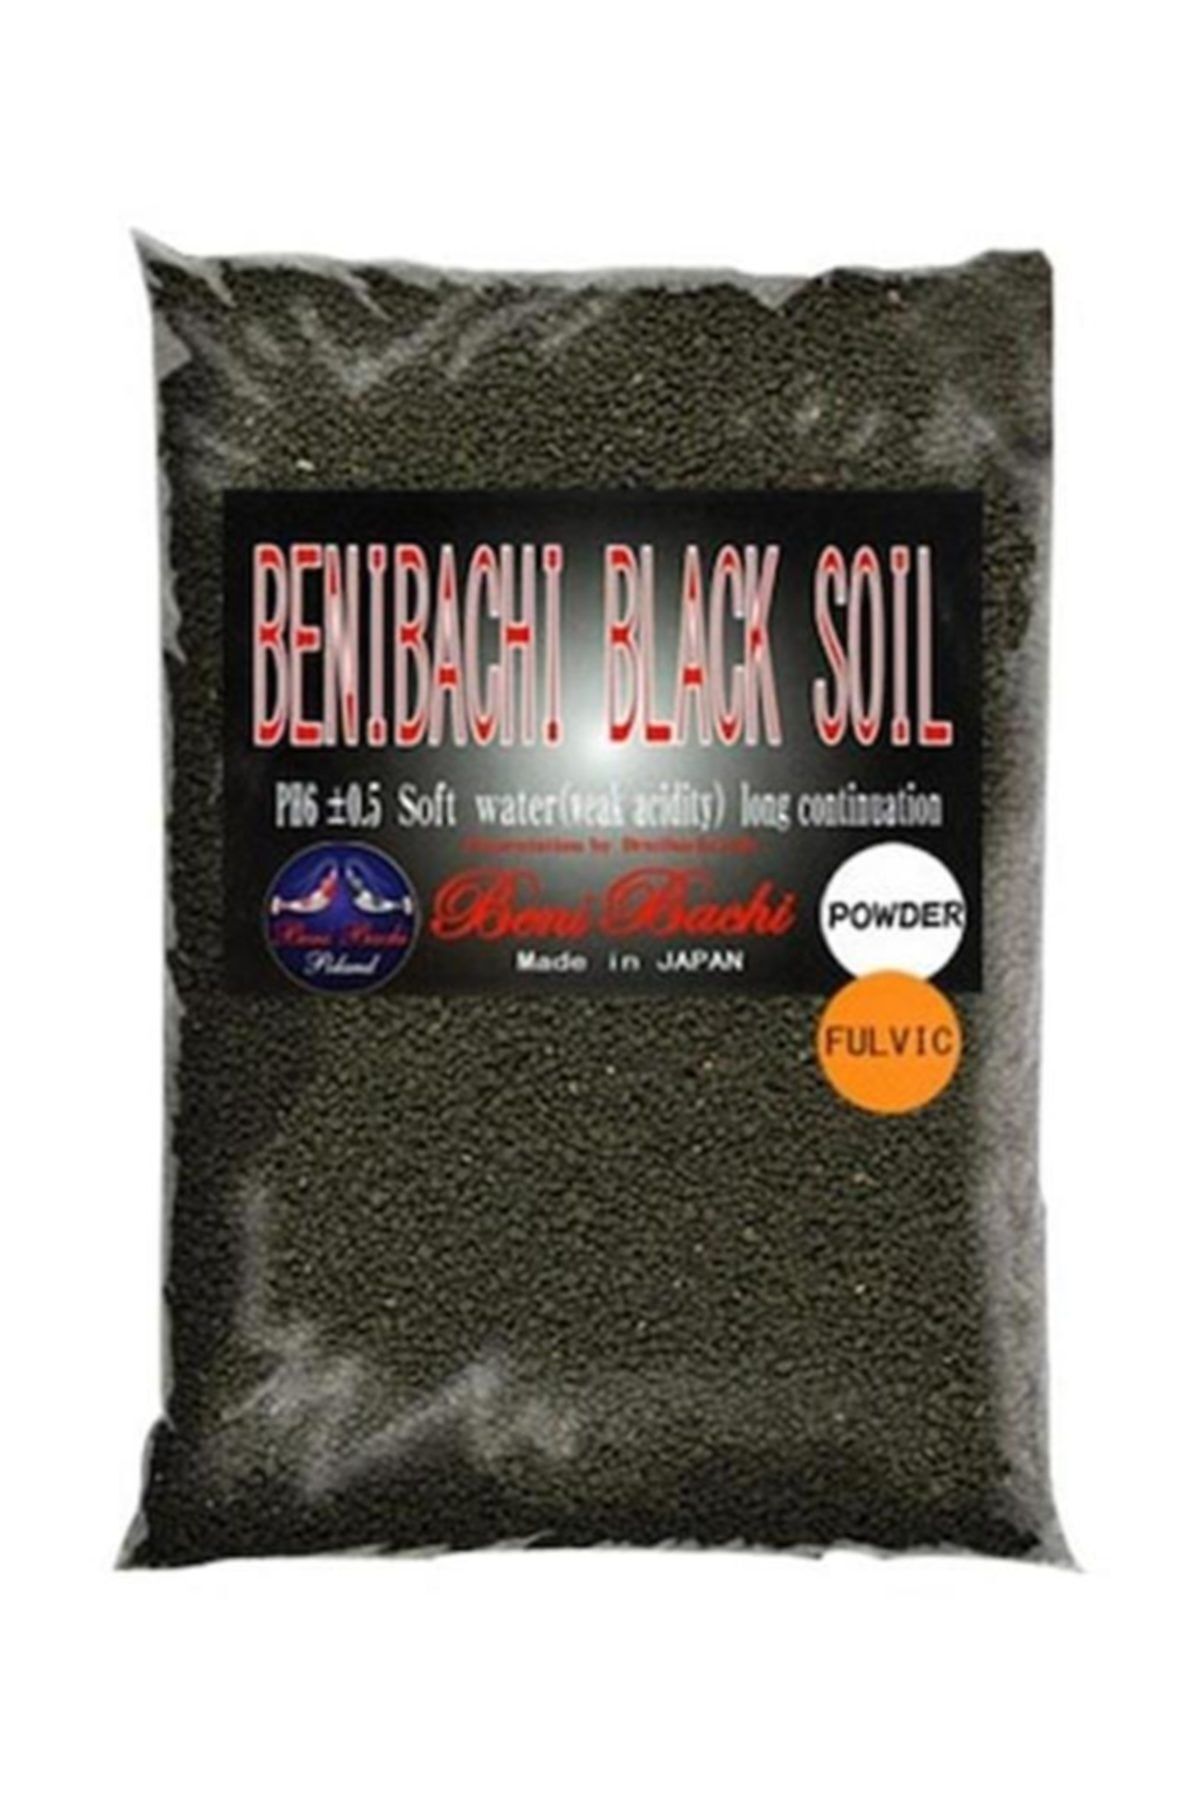 Benibachi Black Soil Fulvic Super Powder 3 kg 4560462900103